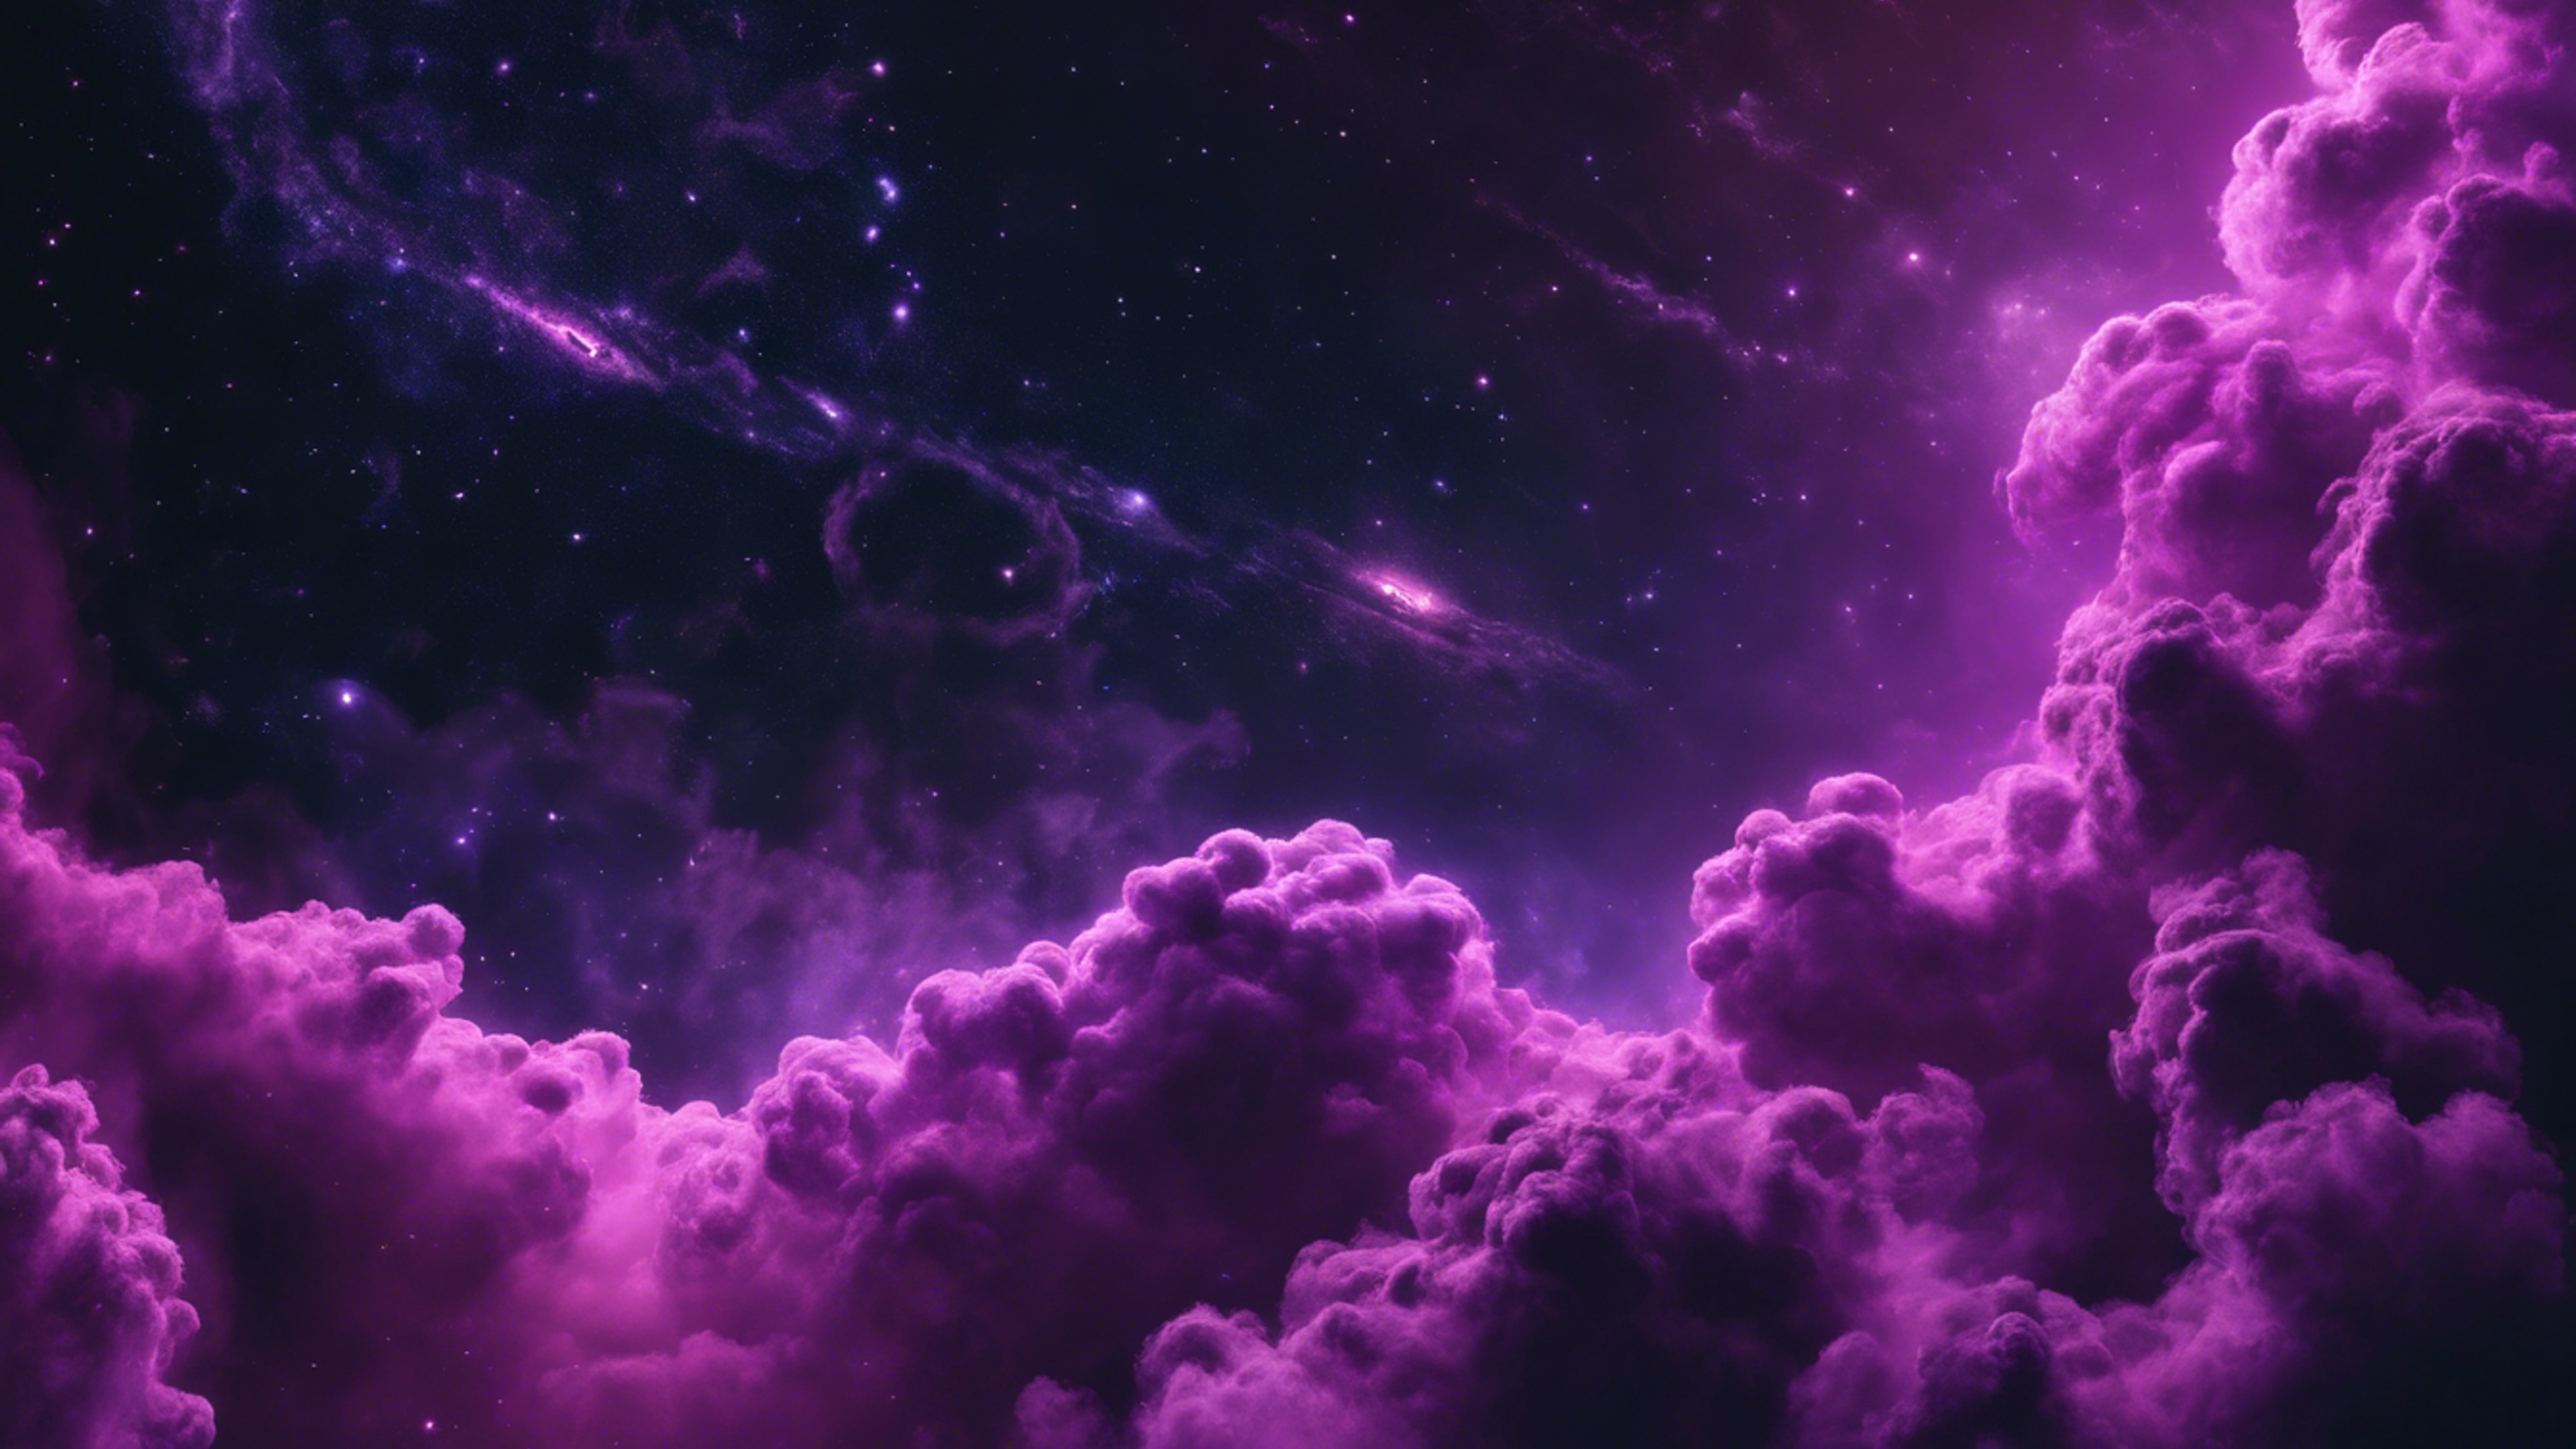 A galaxy scene with swirling neon purple clouds against star-spangled, cool black background. Divar kağızı[557a8cf107504dbea099]